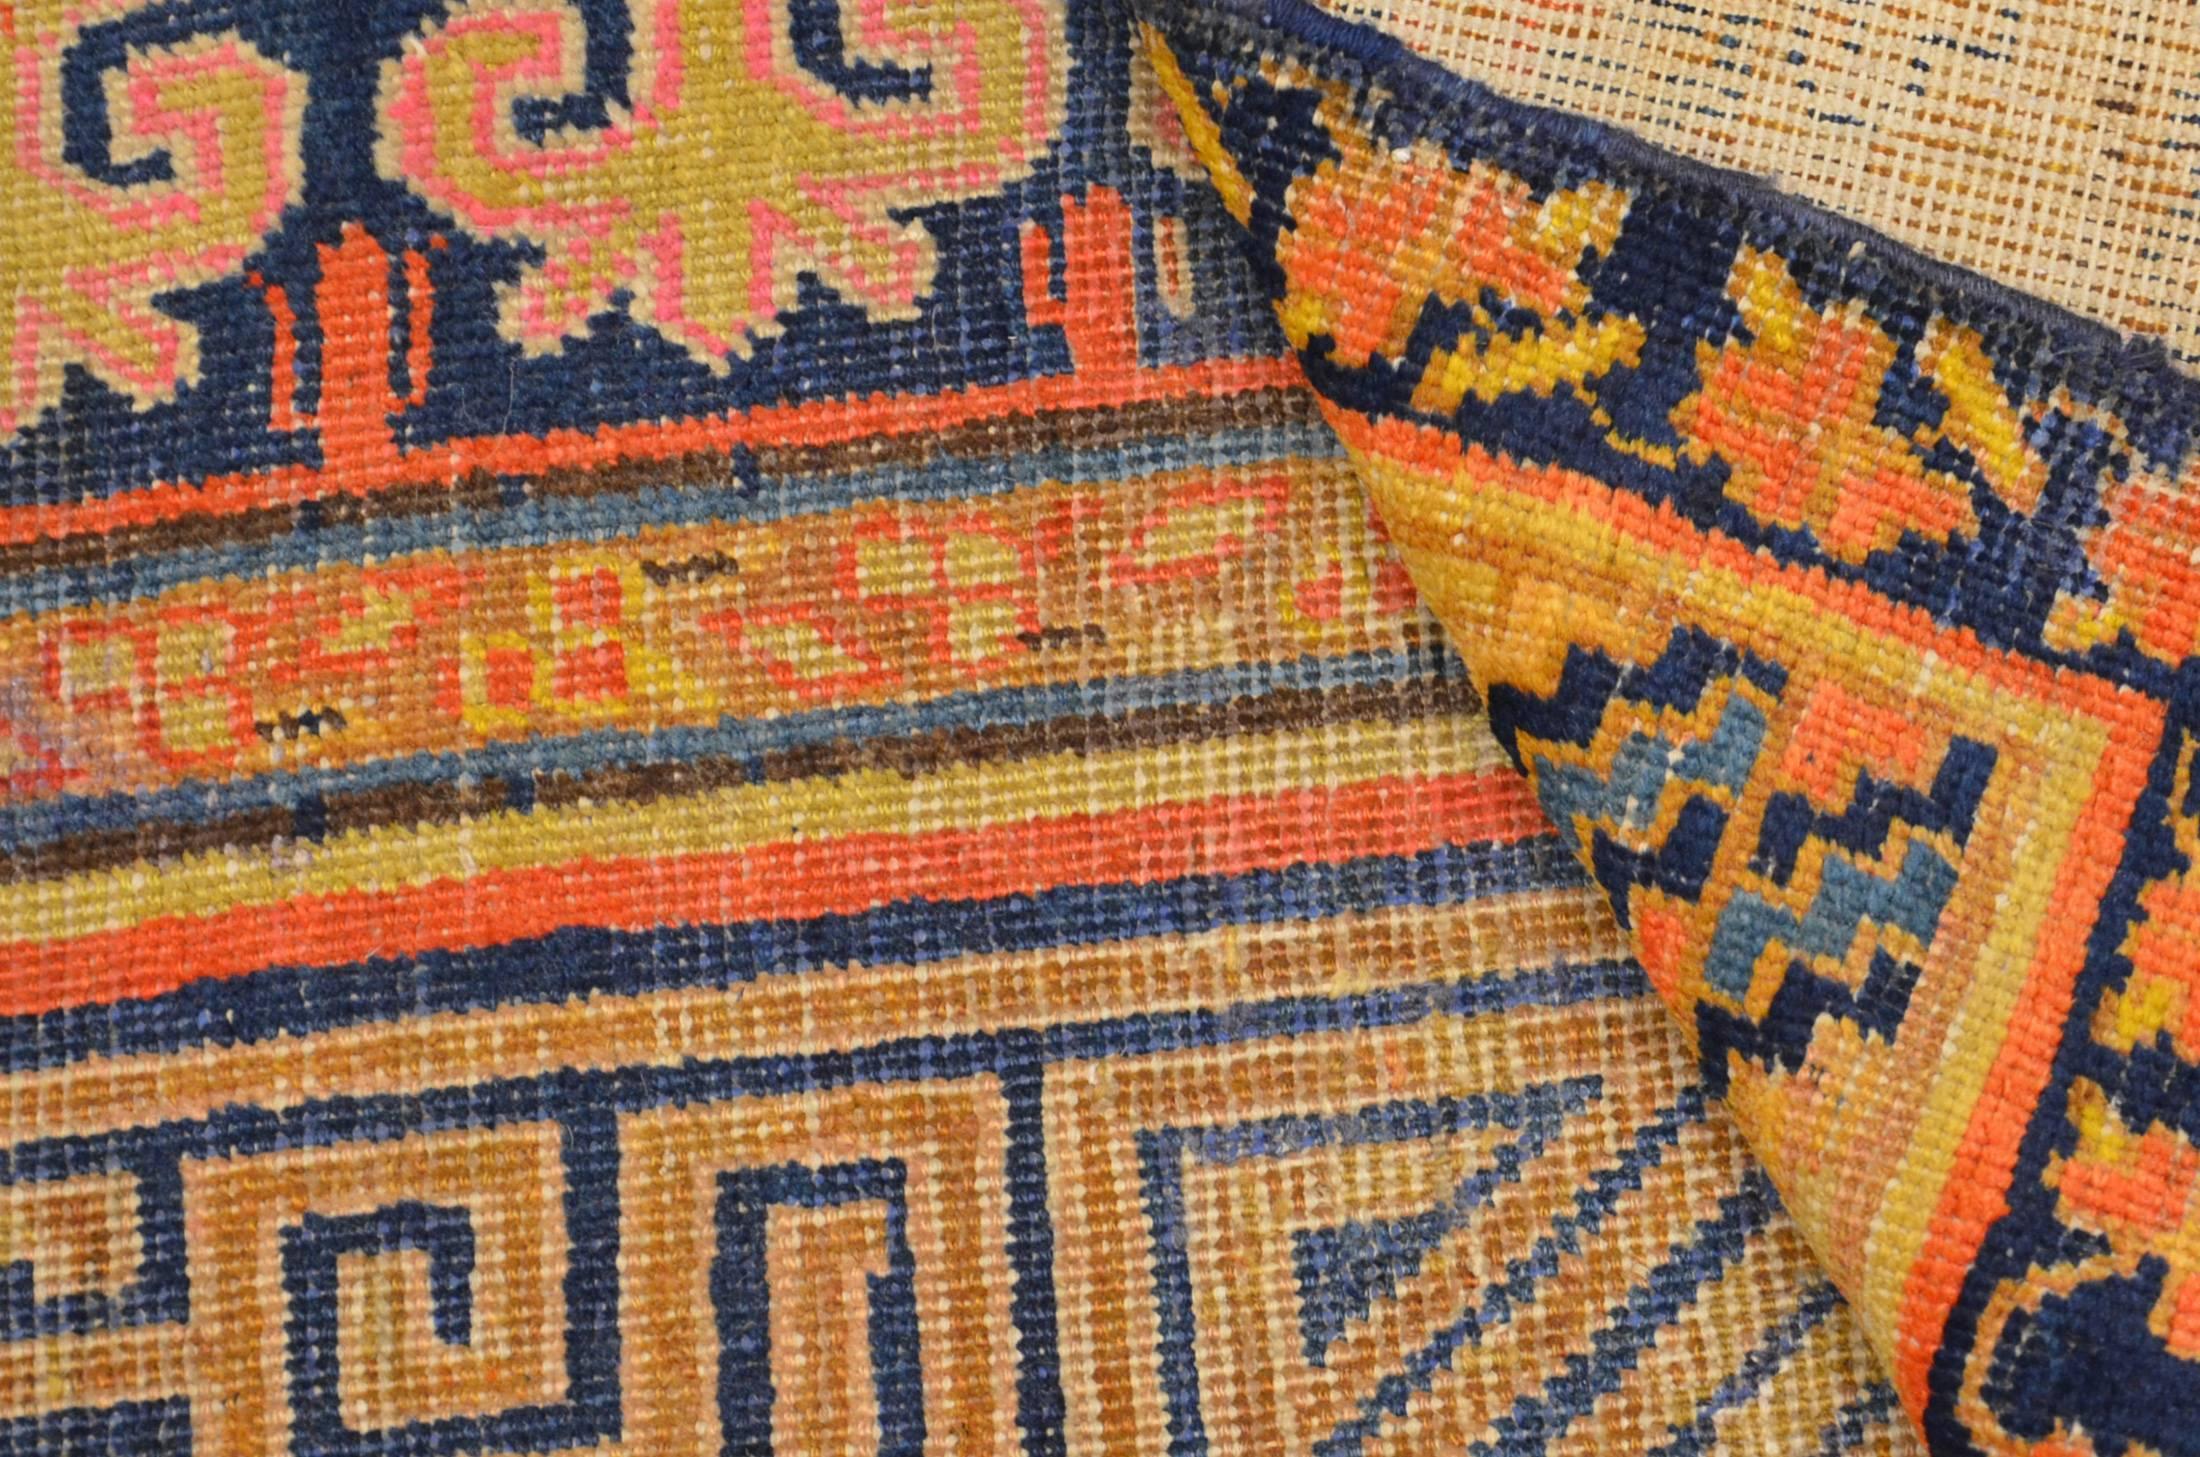 Turkestan Samarkan Carpet, 19th Century